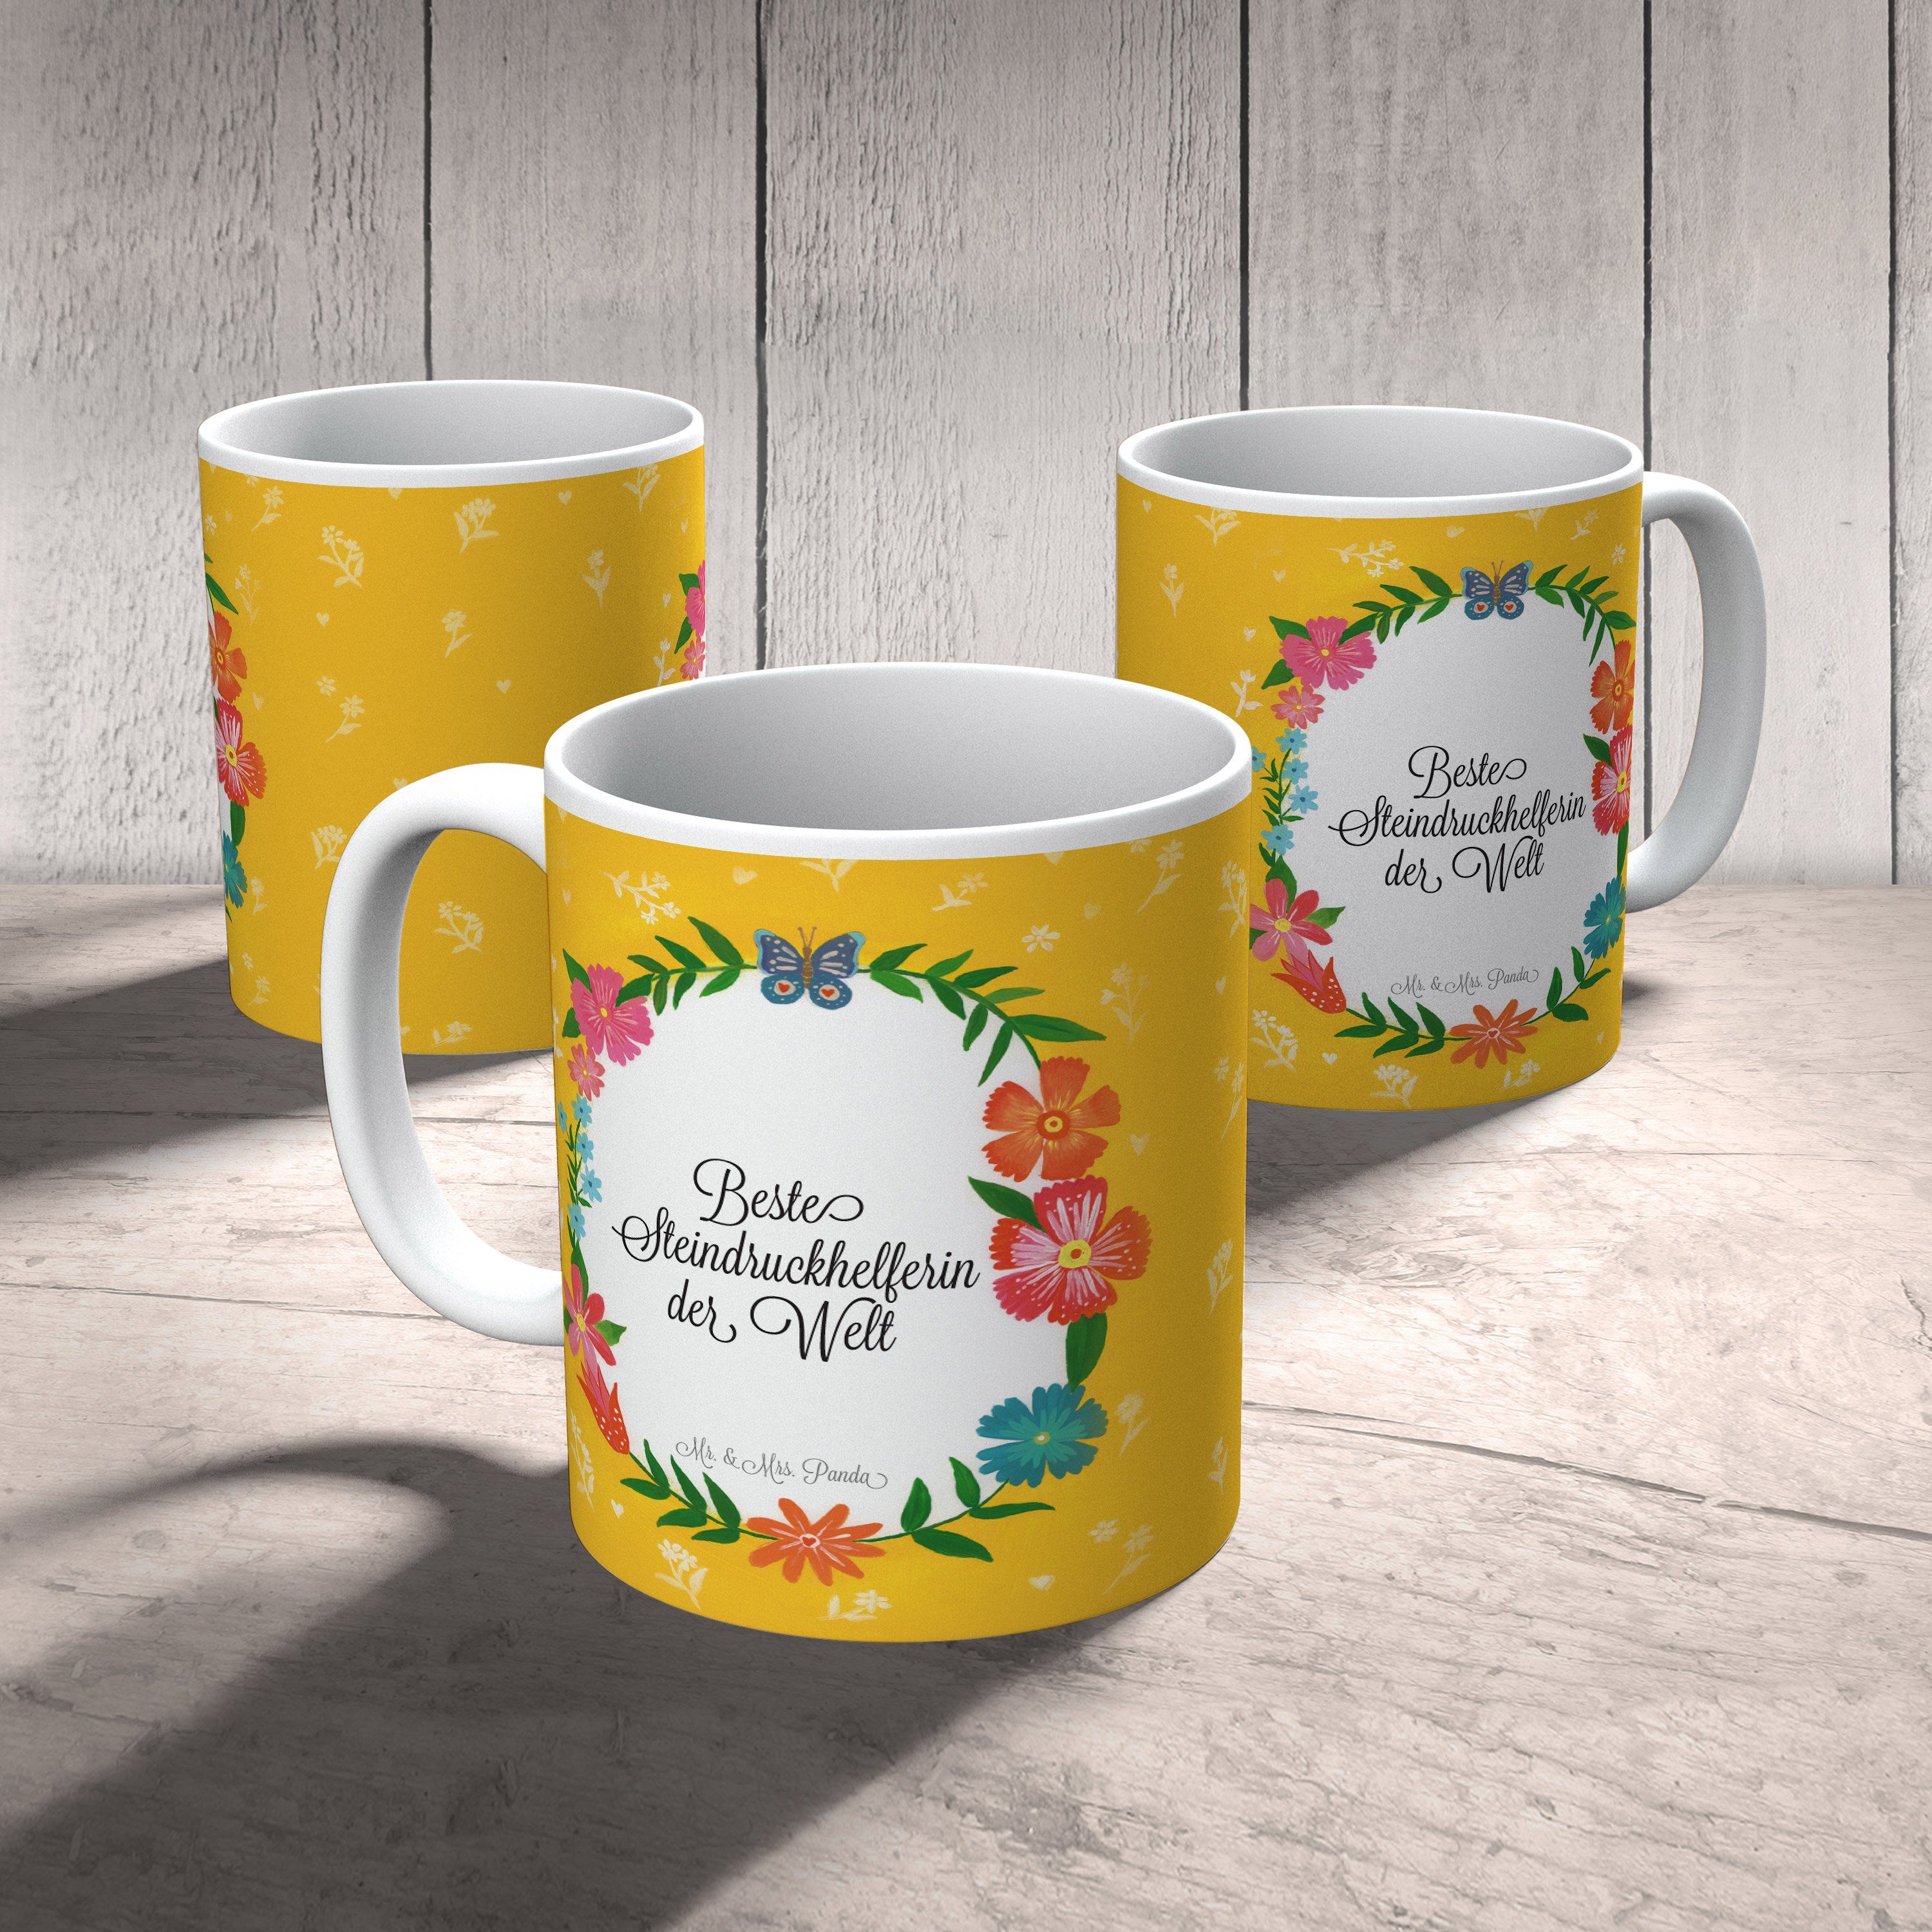 Mr. & Mrs. Panda Kaffeetasse, Geschenk, Tasse Ausbildung, - Kaffeebecher, Steindruckhelferin Keramik